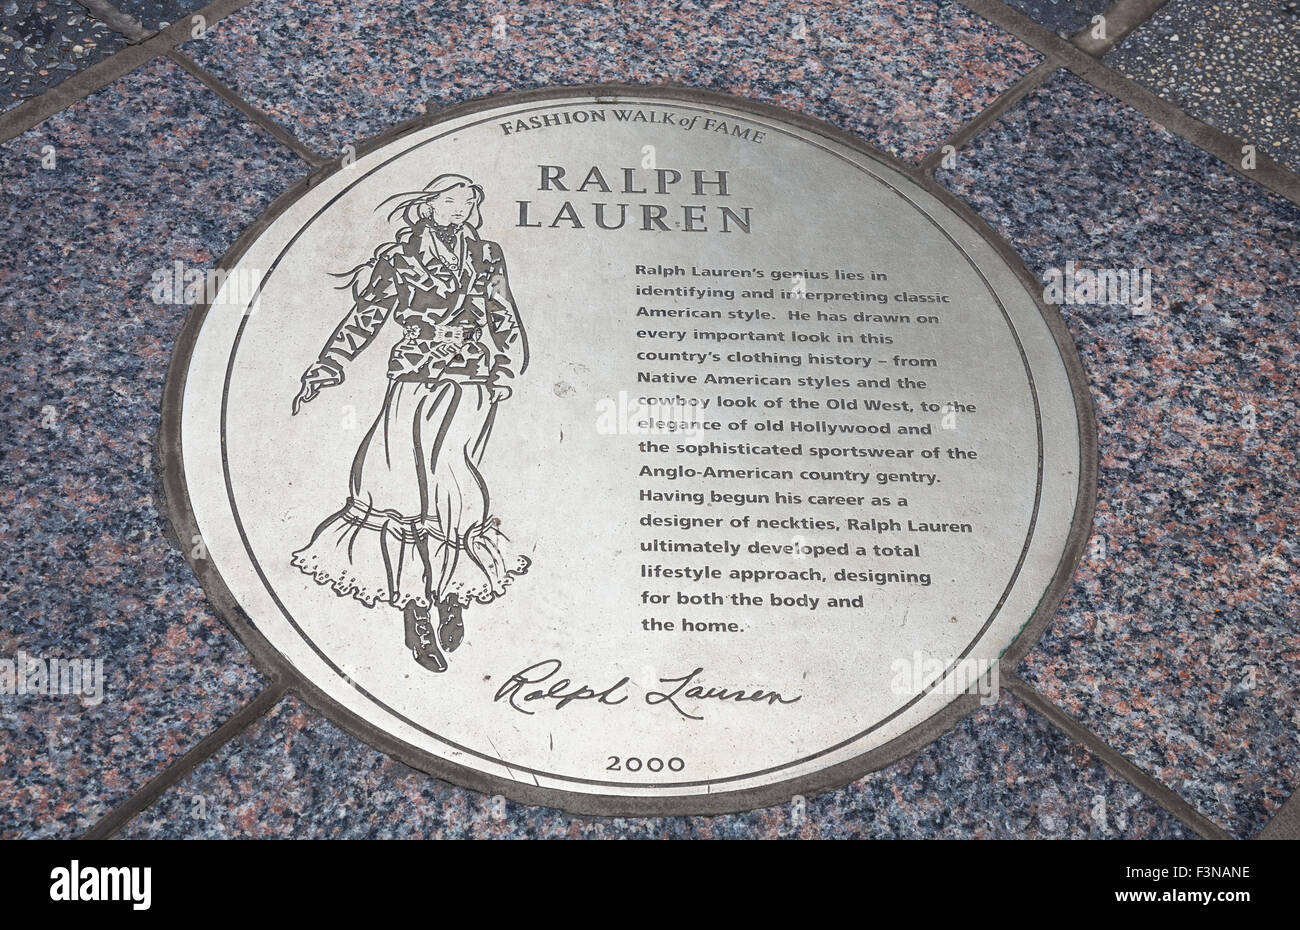 A sidewalk plaque honouring designer Ralph Lauren on the Fashion Walk of Fame, New York City. Stock Photo